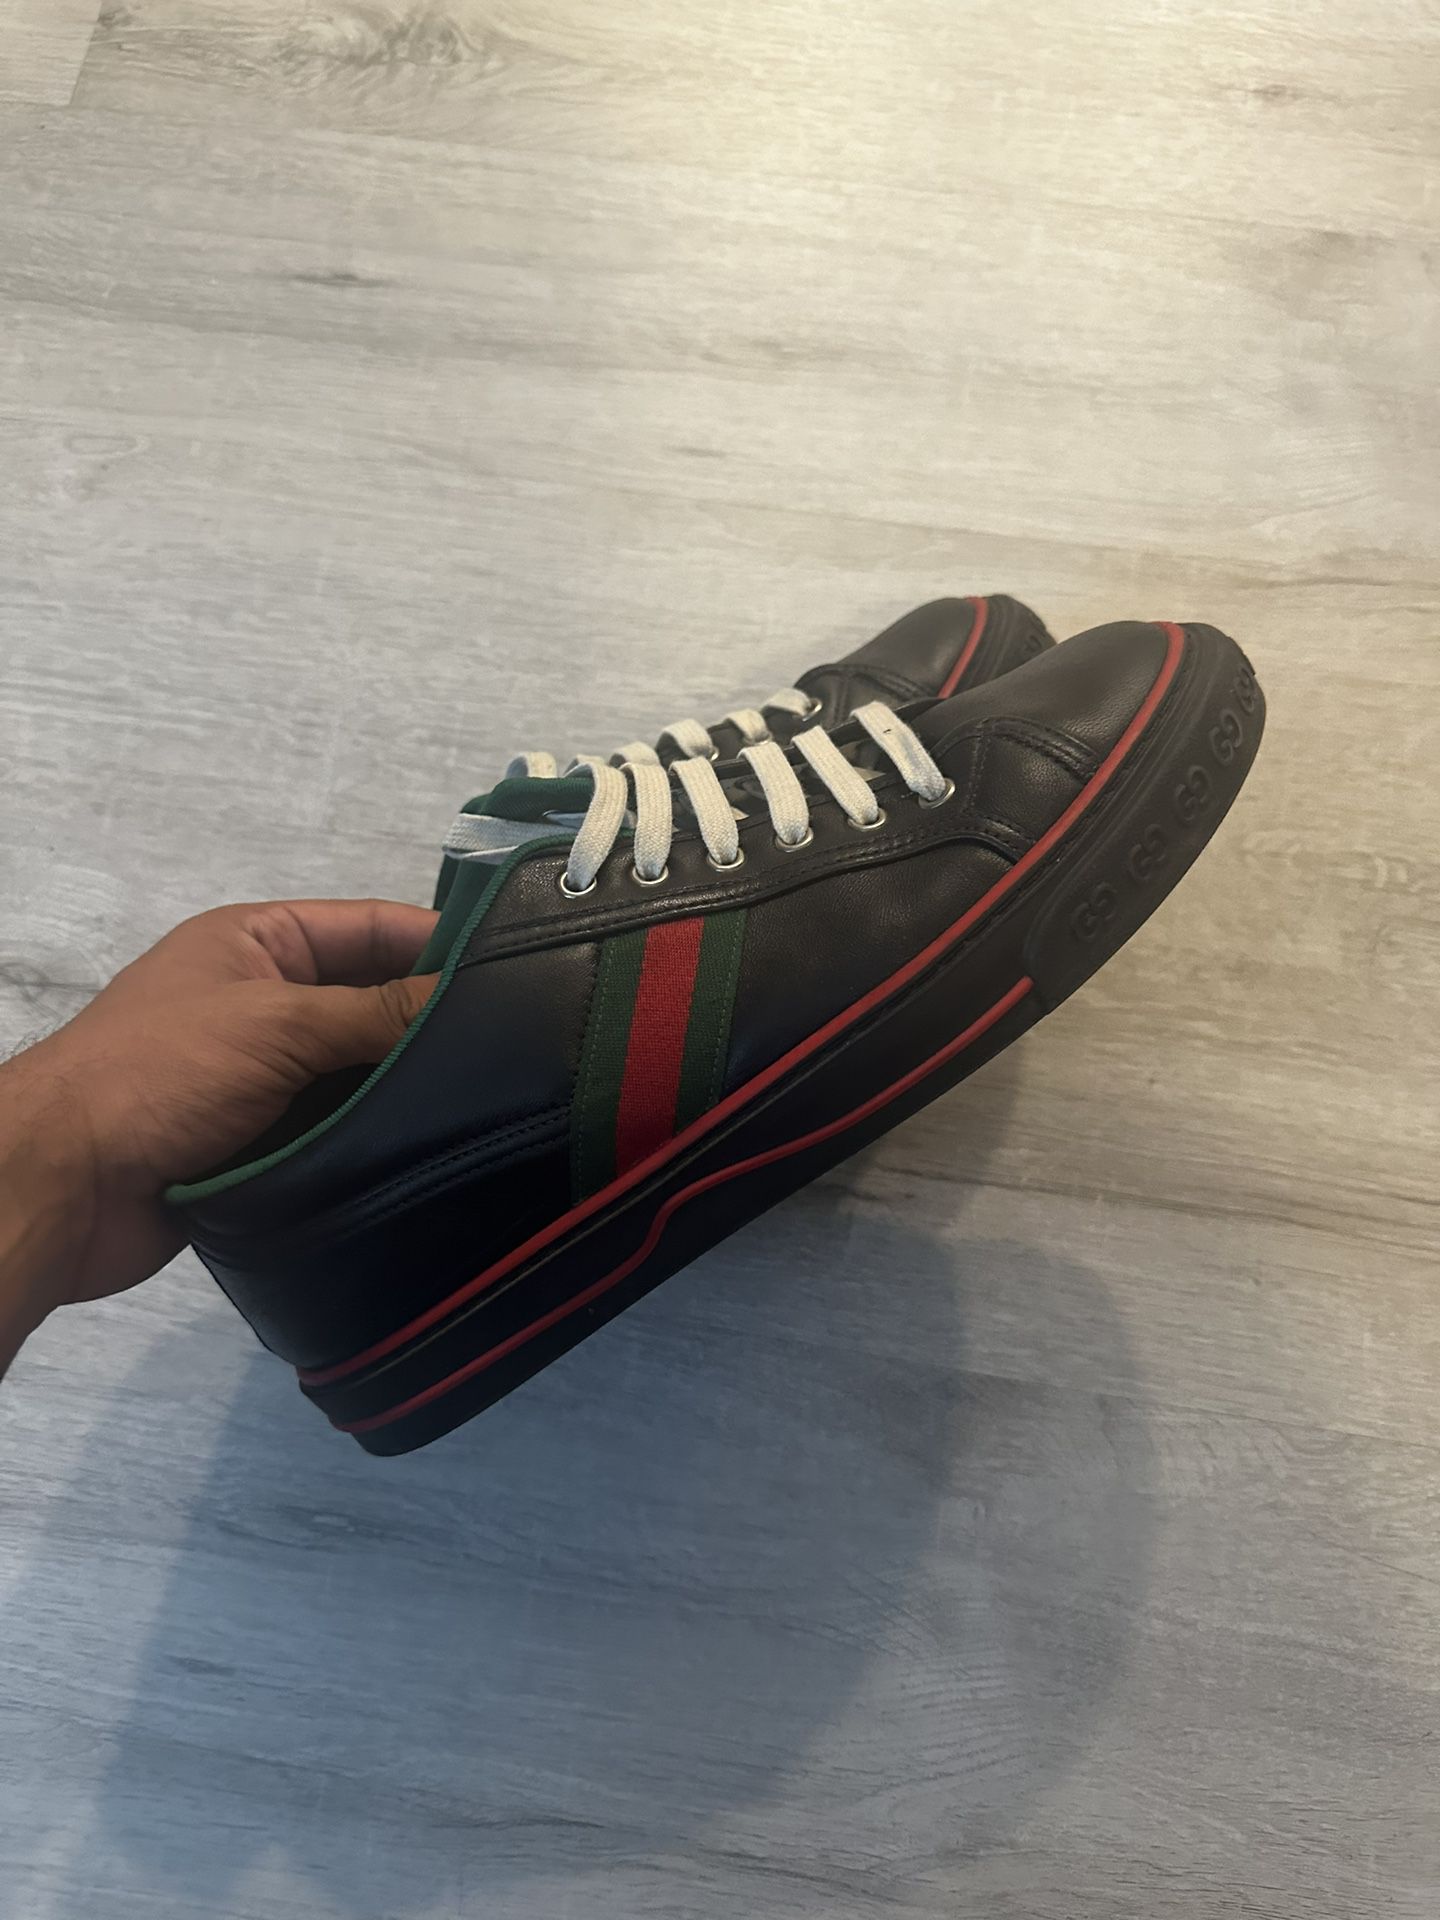 gucci shoes size 9